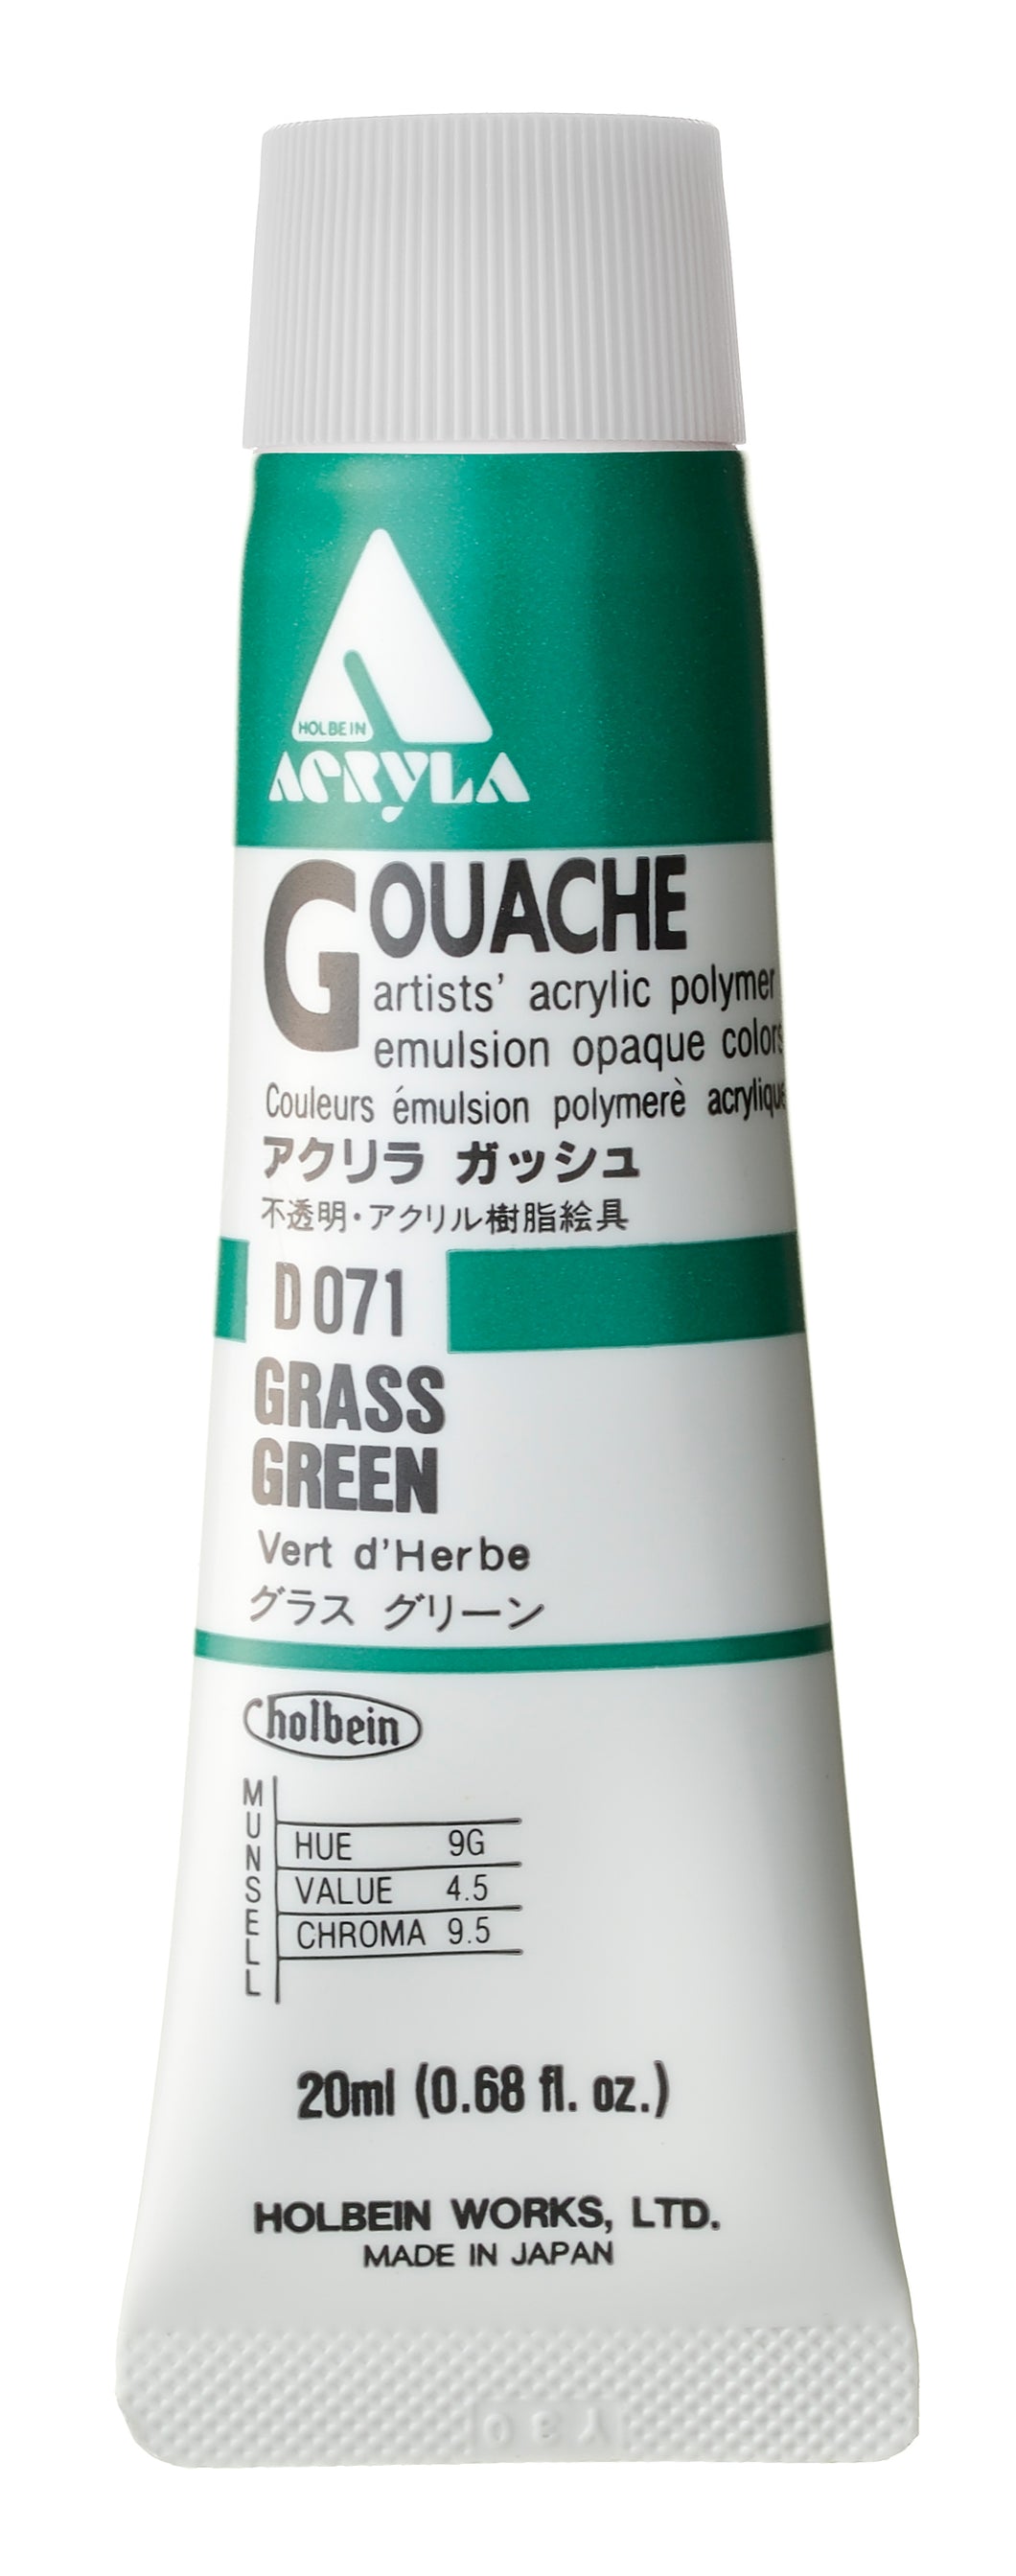 Holbein Acryla Gouache- Grass Green (D071)